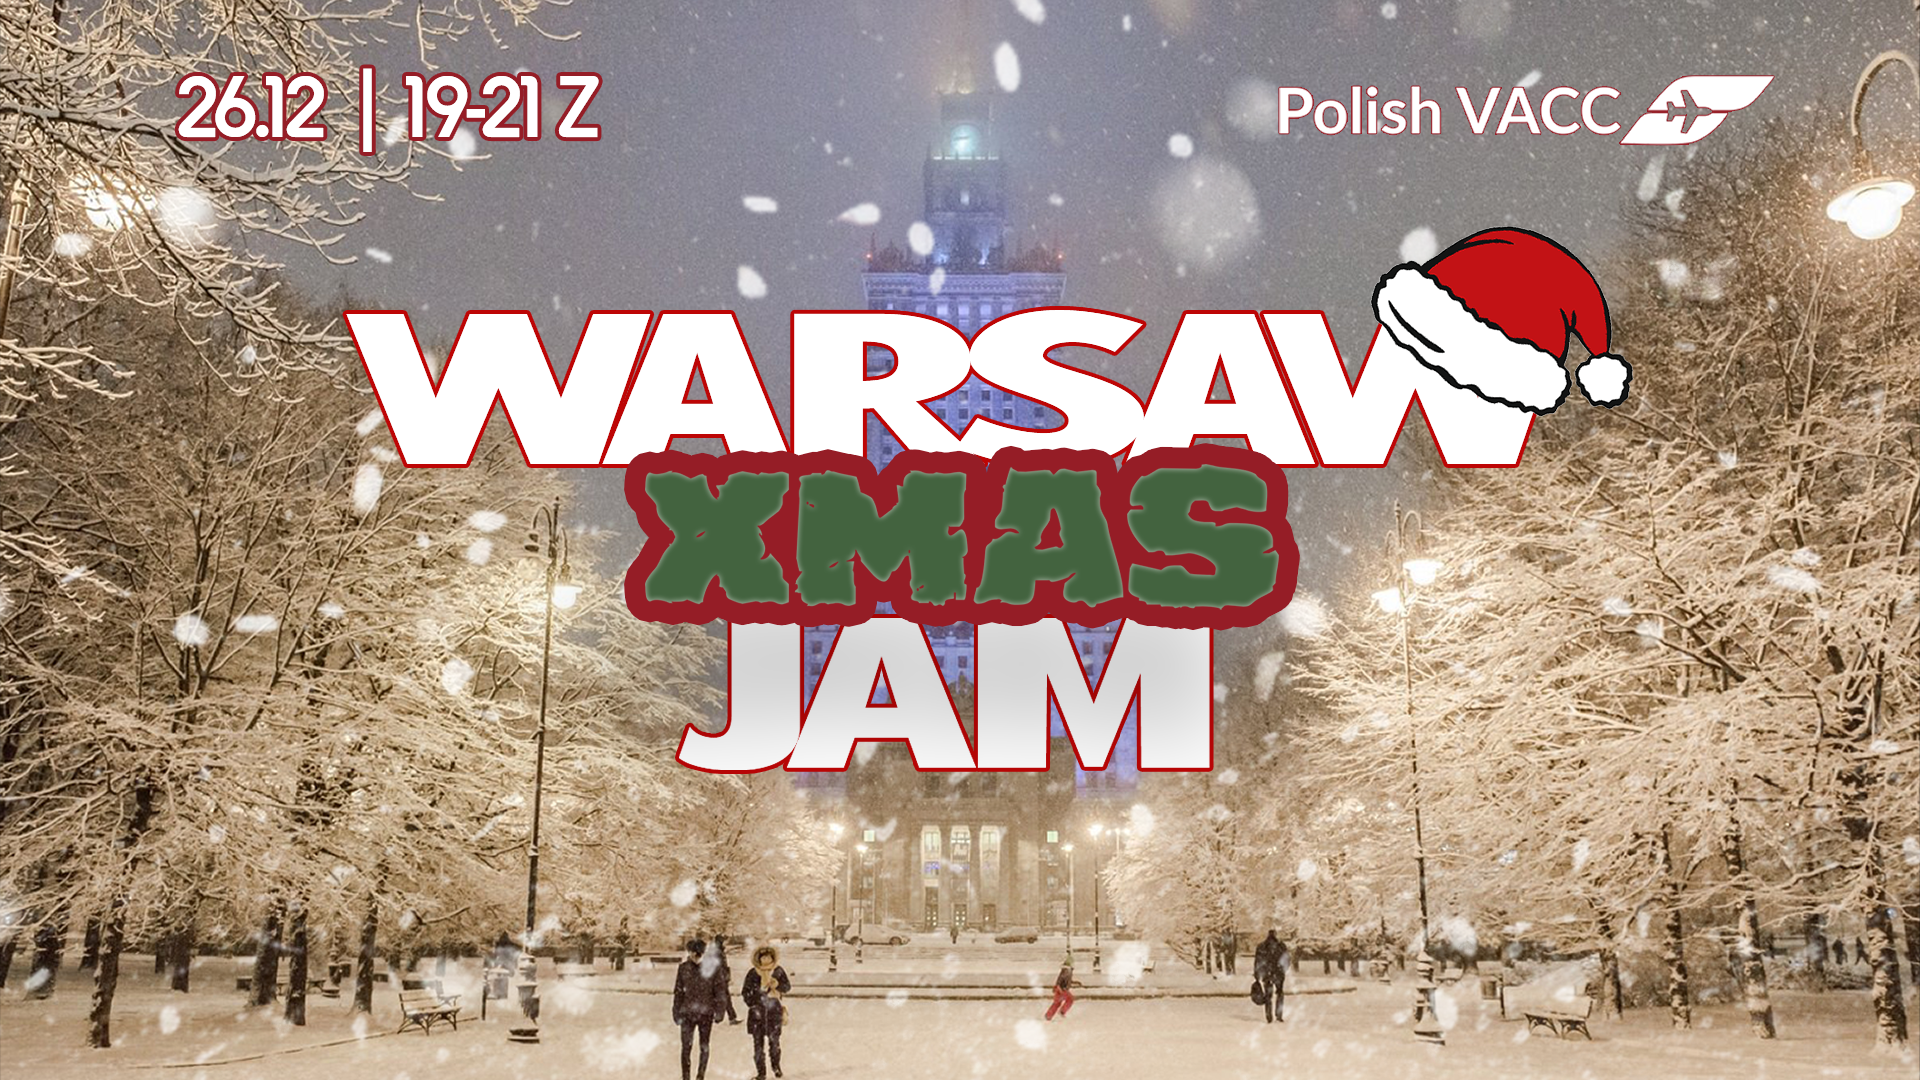 Warsaw X-mas Jam - Virtual Norwegian Events